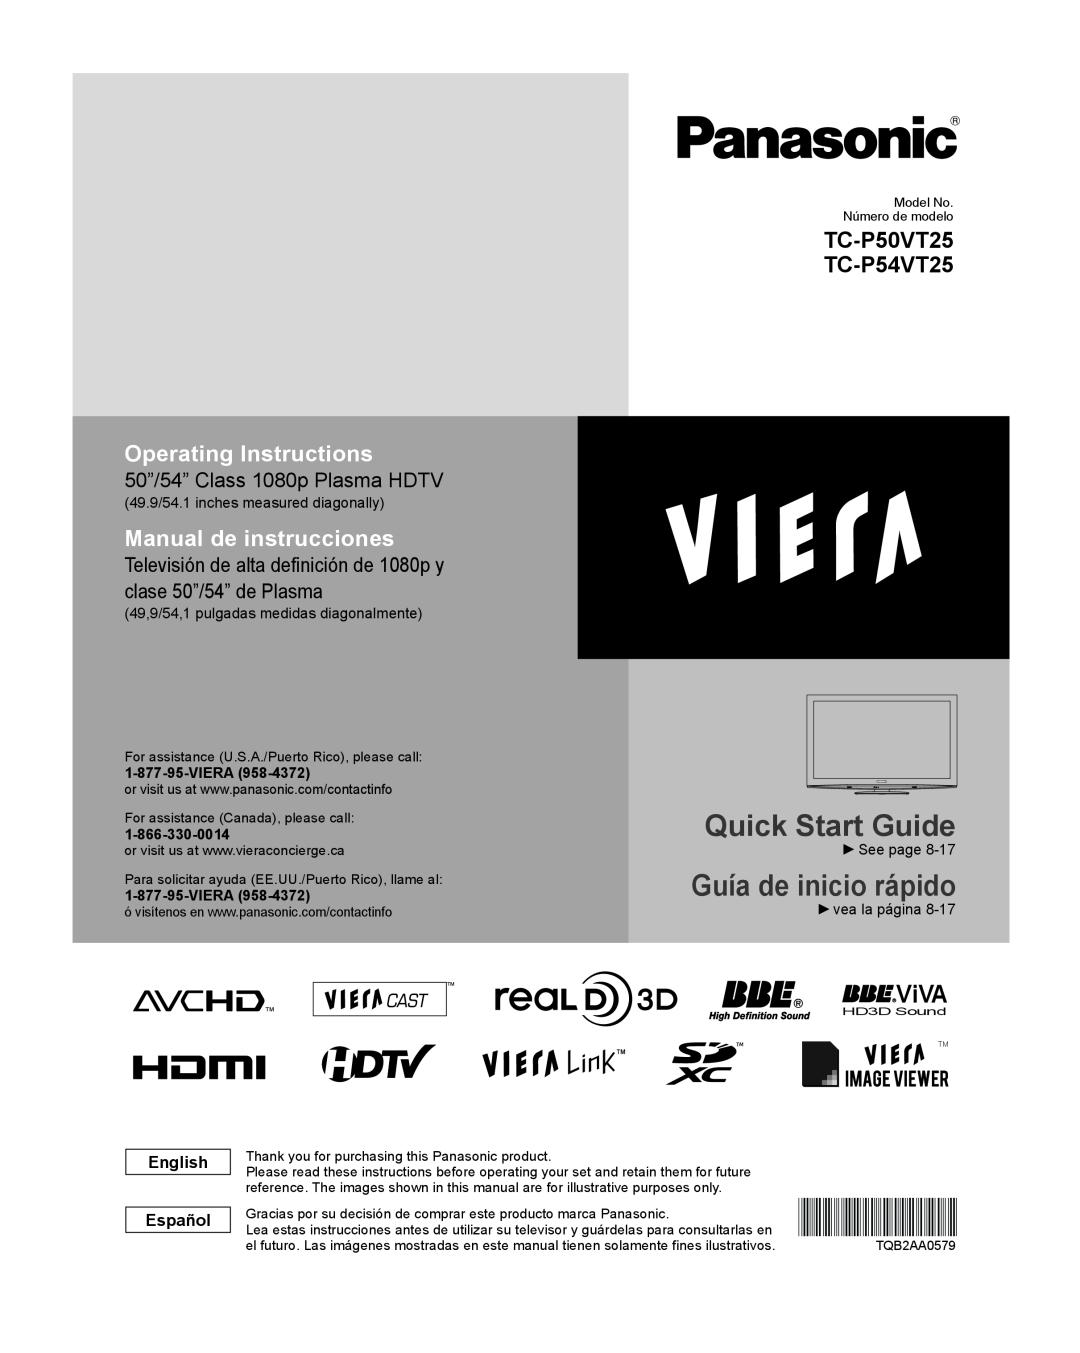 Panasonic TQB2AA0579 quick start ViVA, Operating Instructions, Manual de instrucciones, English Español, Viera 